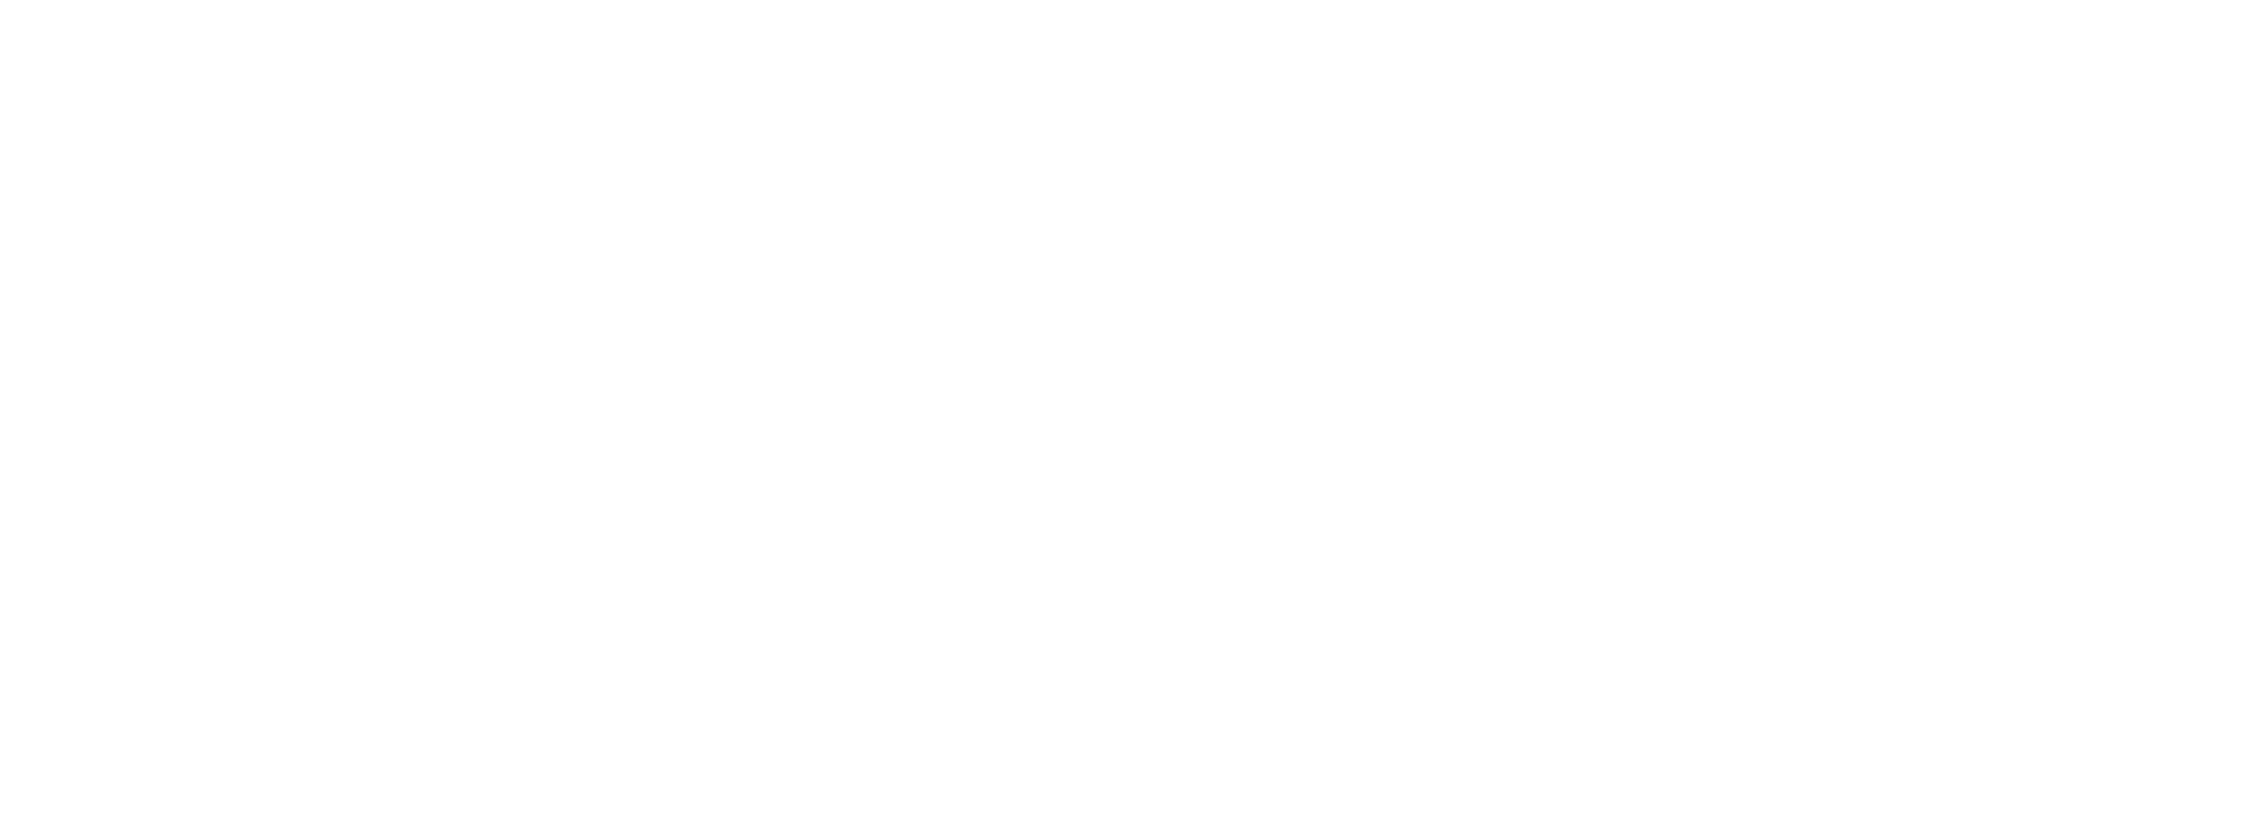 Disney Programs Weekly Newsletter Header- White